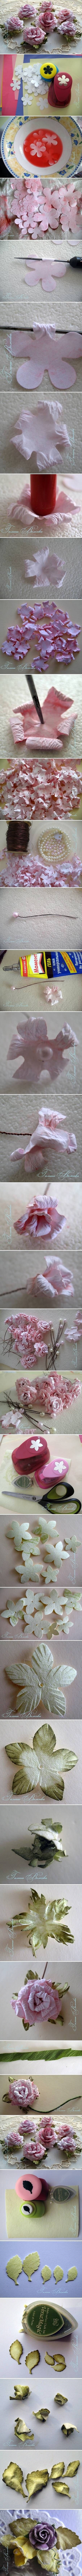 DIY卷纸玫瑰花教程